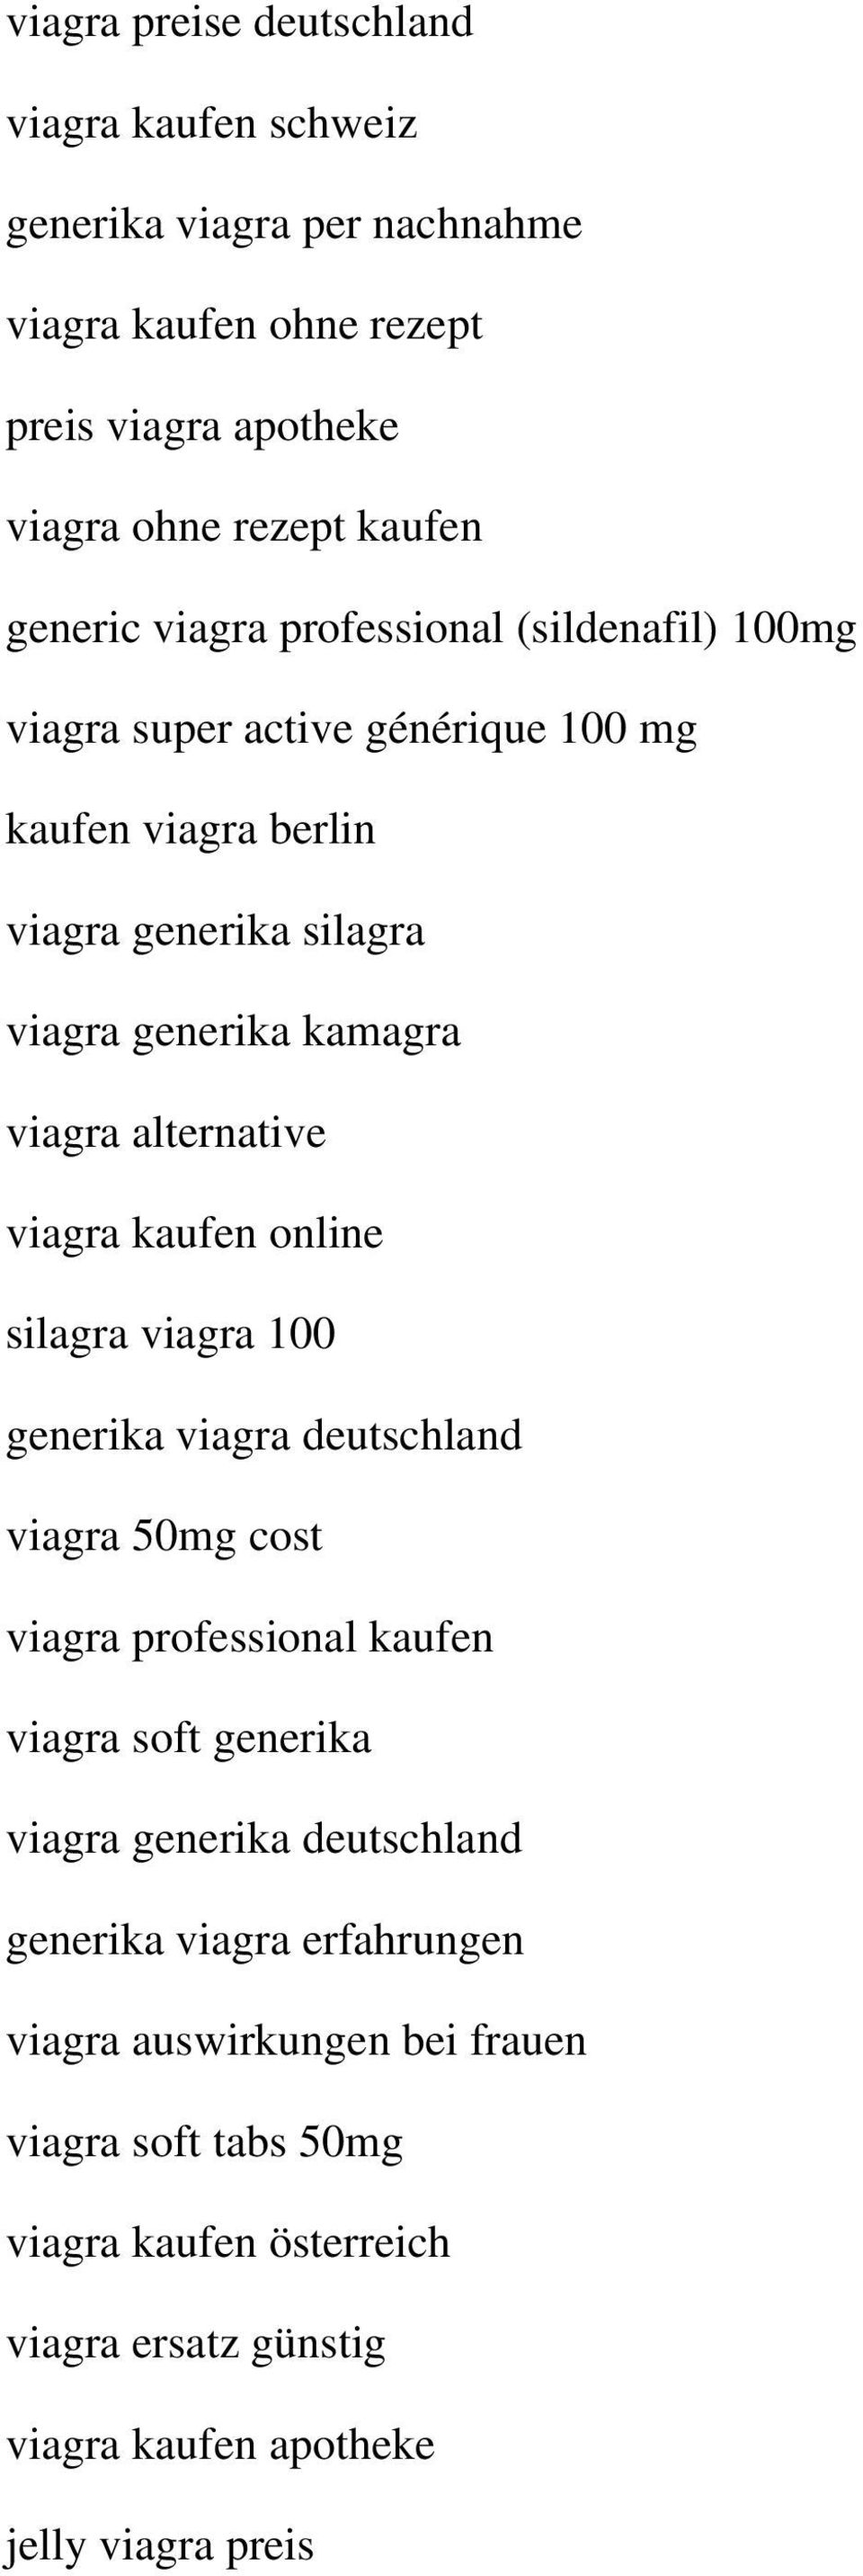 viagra kaufen online silagra viagra 100 generika viagra deutschland viagra 50mg cost viagra professional kaufen viagra soft generika viagra generika deutschland